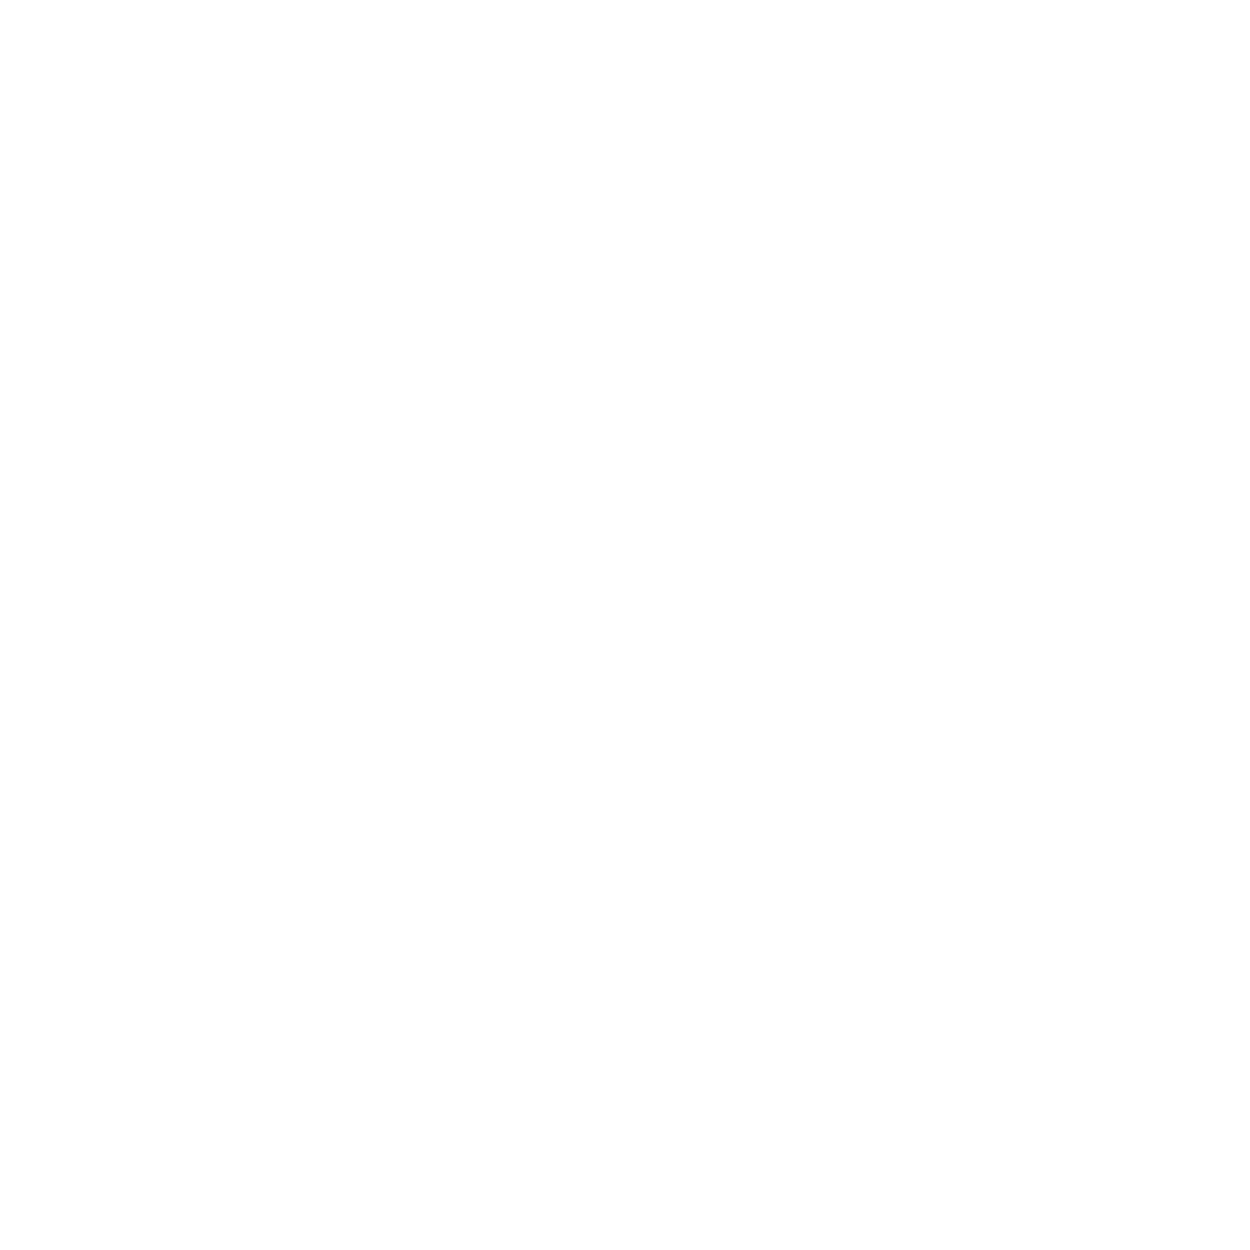 Priority Seven